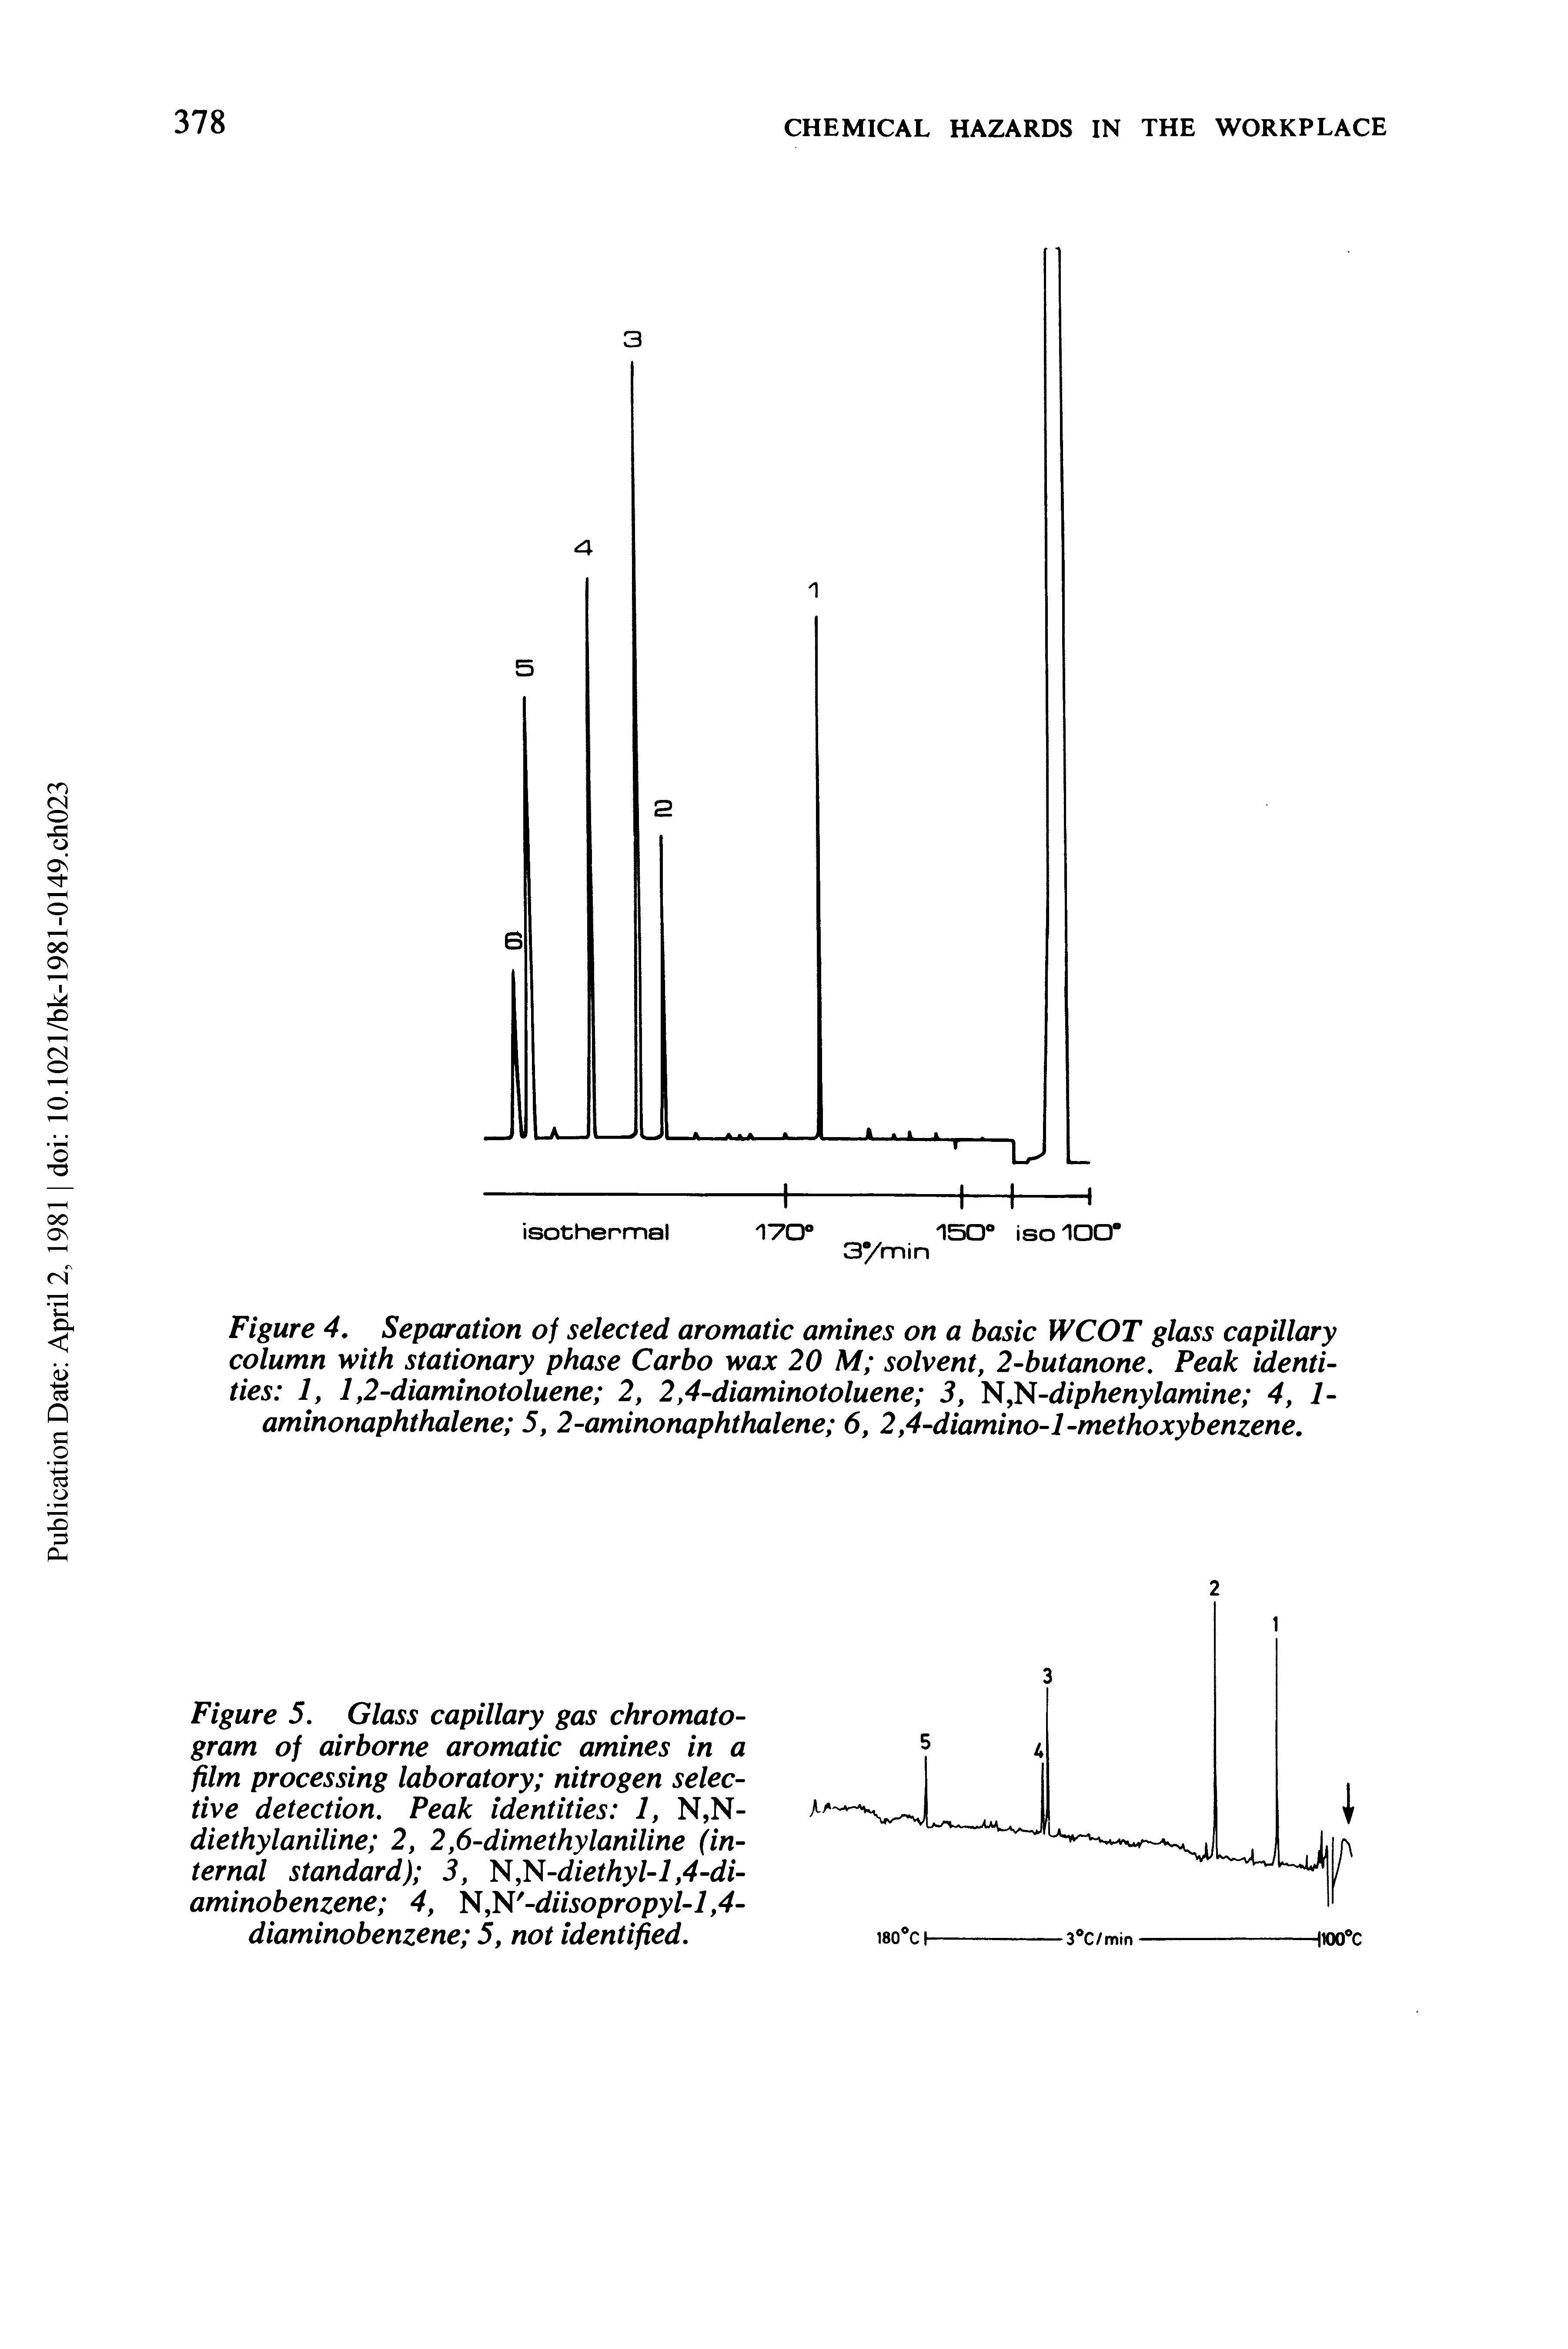 Figure 4. Separation of selected aromatic amines on a basic WCOT glass capillary column with stationary phase Carbo wax 20 M solvent, 2-butanone. Peak identities 1, 1,2-diaminotoluene 2, 2,4-diaminotoluene 3, N,N-dipheny famine 4, 1-aminonaphthalene 5, 2-aminonaphthalene 6, 2,4-diamino-l-methoxybenzene.